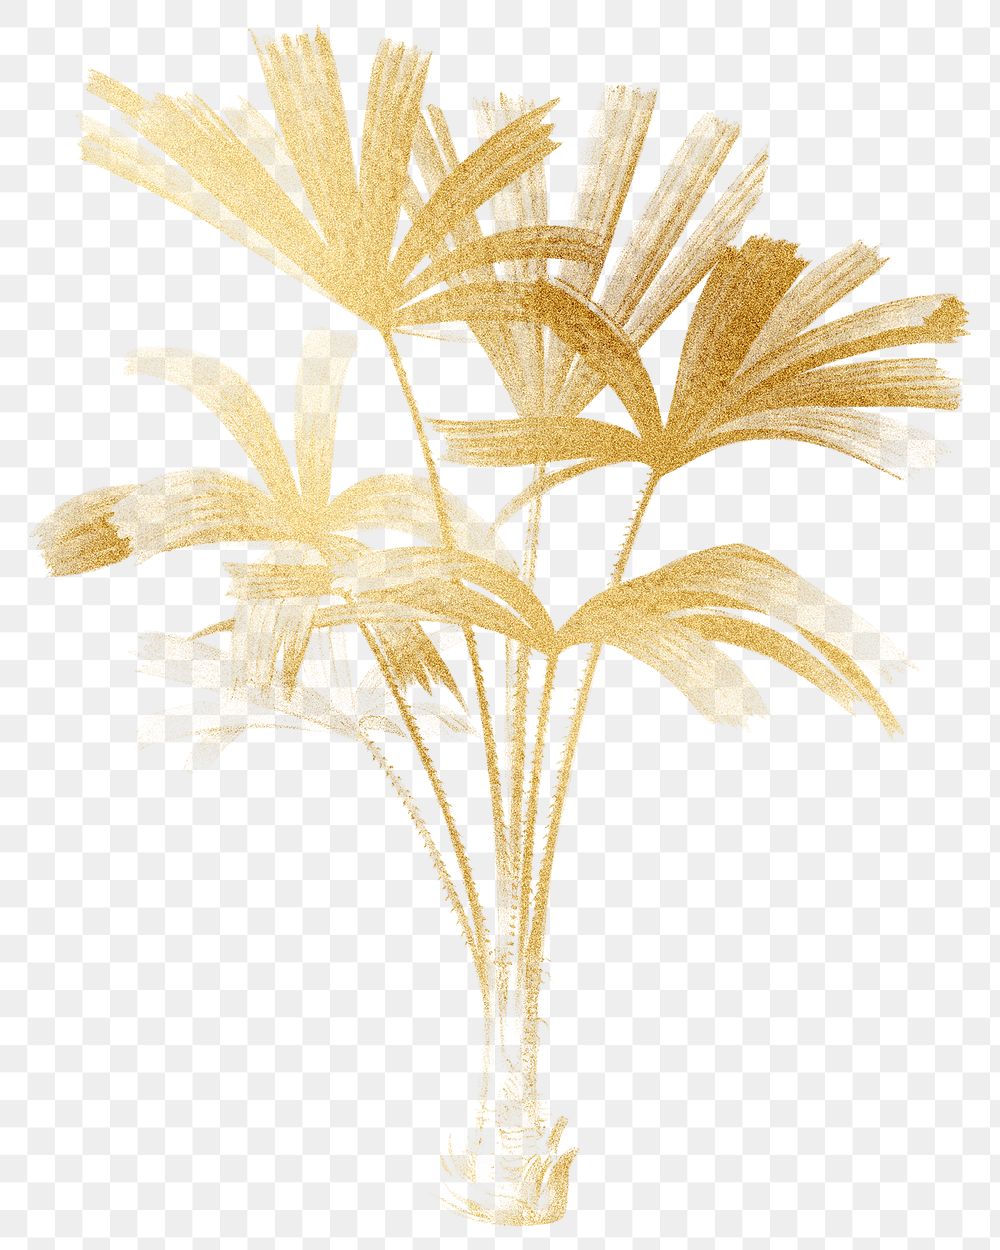 PNG gold mangrove fan palm sticker, transparent background